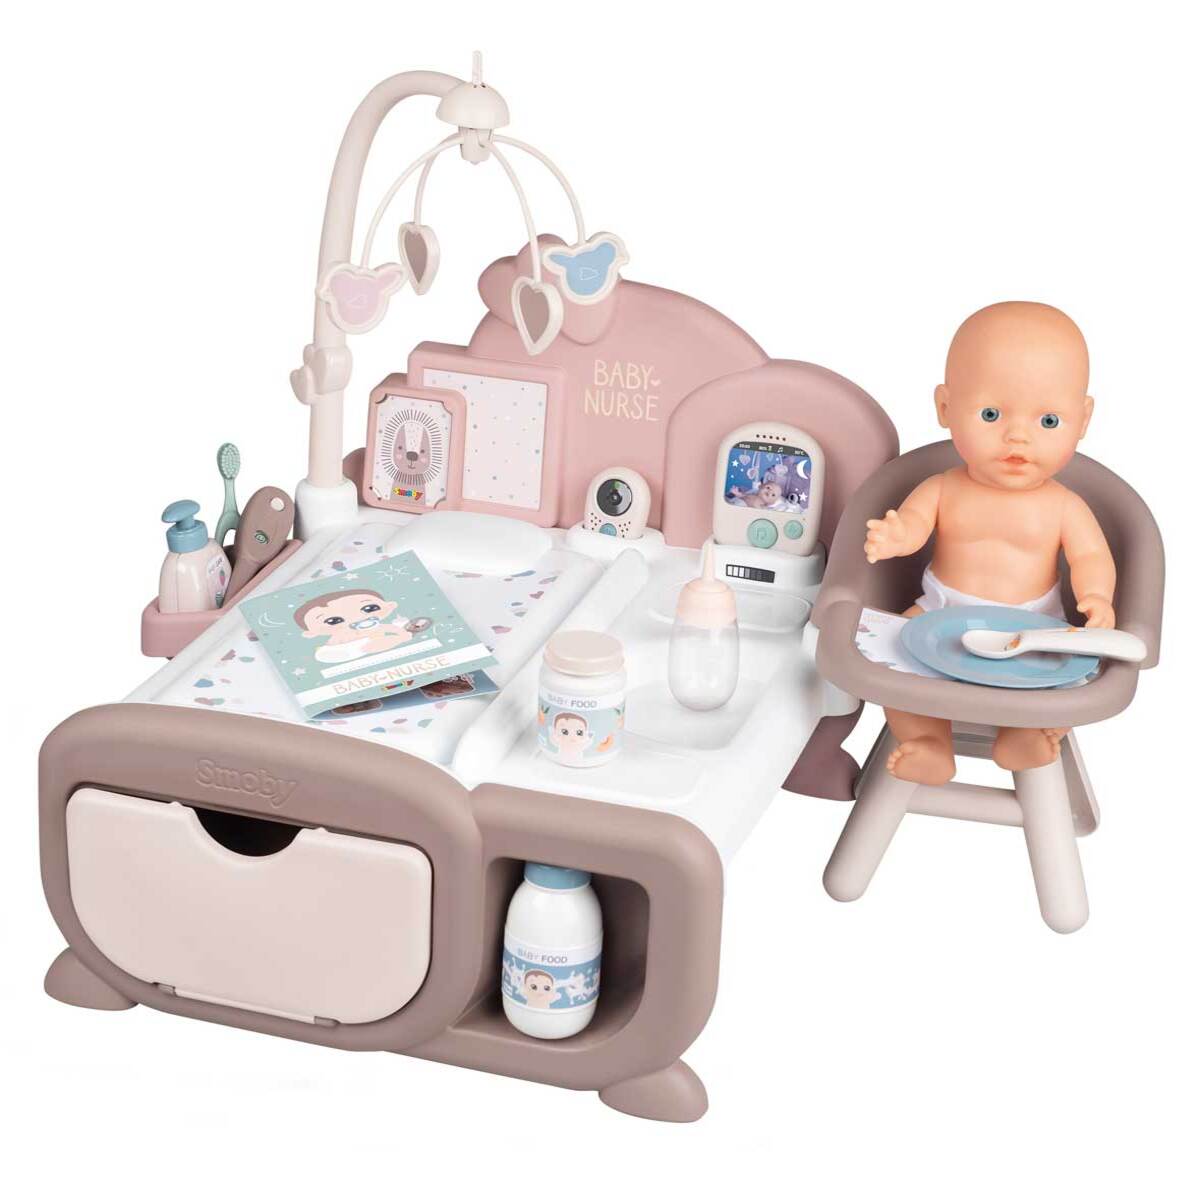 Smoby - Baby Nurse : Large Doll's PlayCenter + Nursery Suitcase